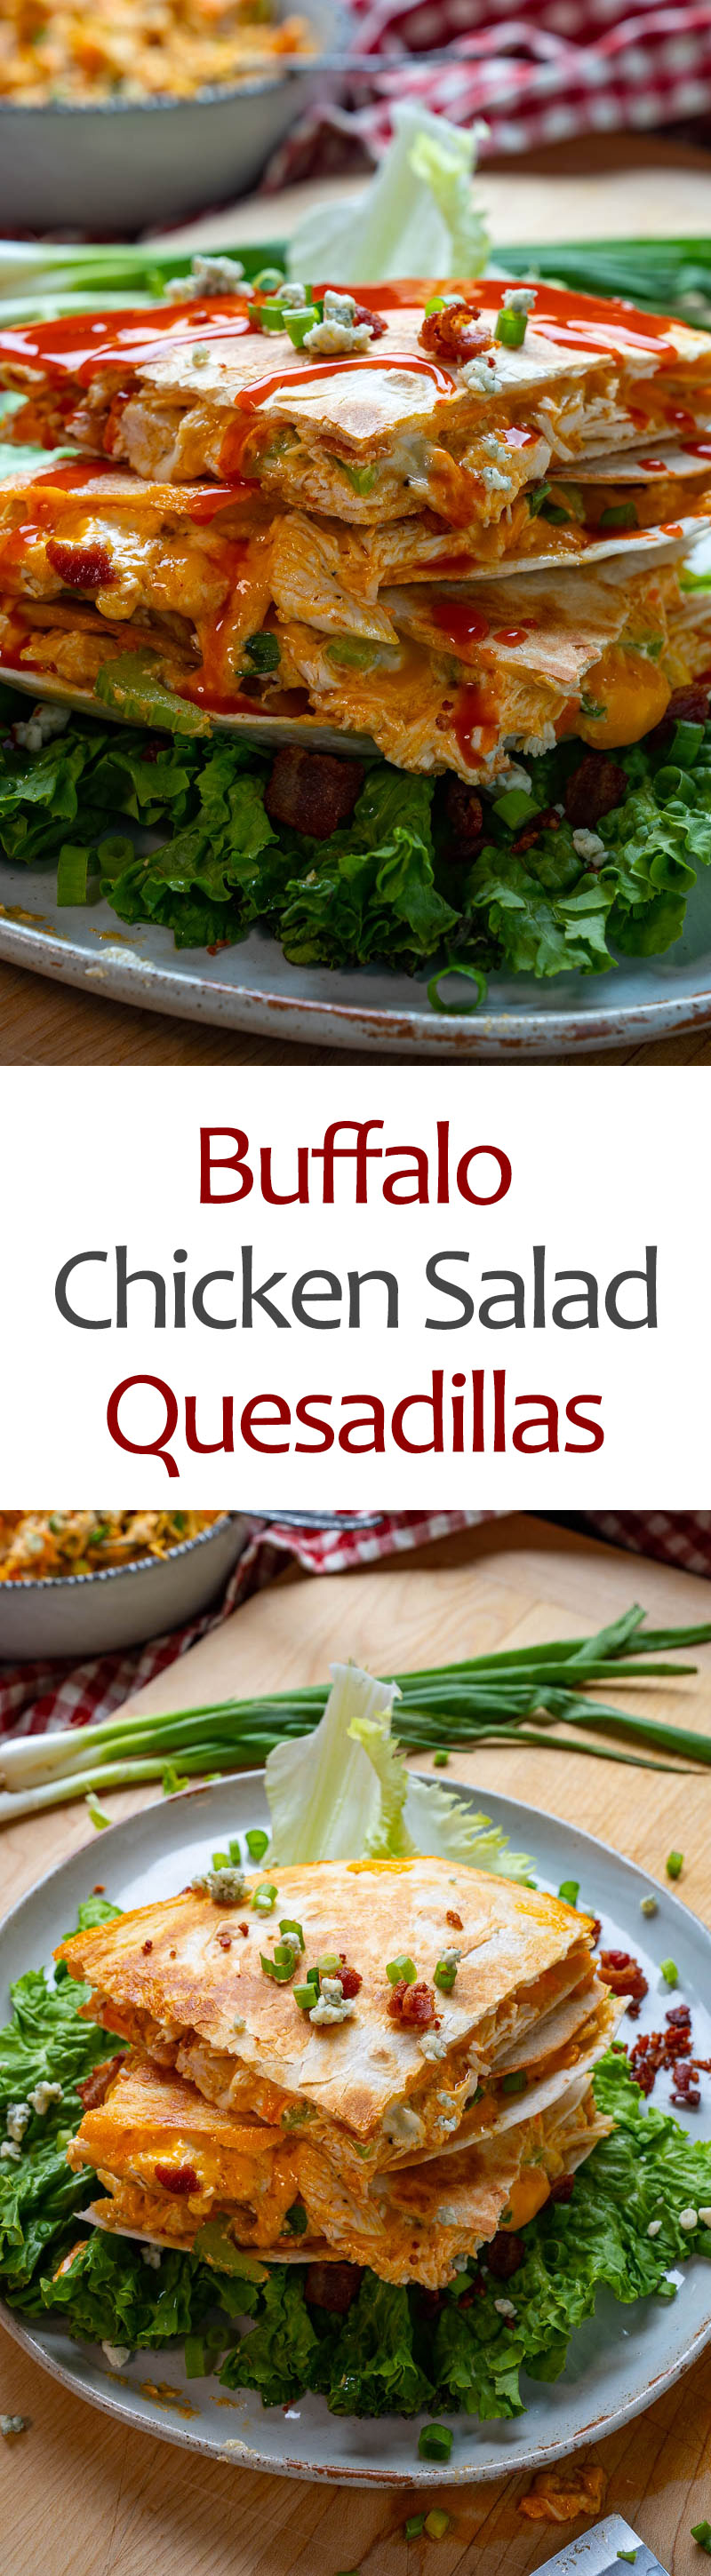 Buffalo Chicken Salad Quesadillas